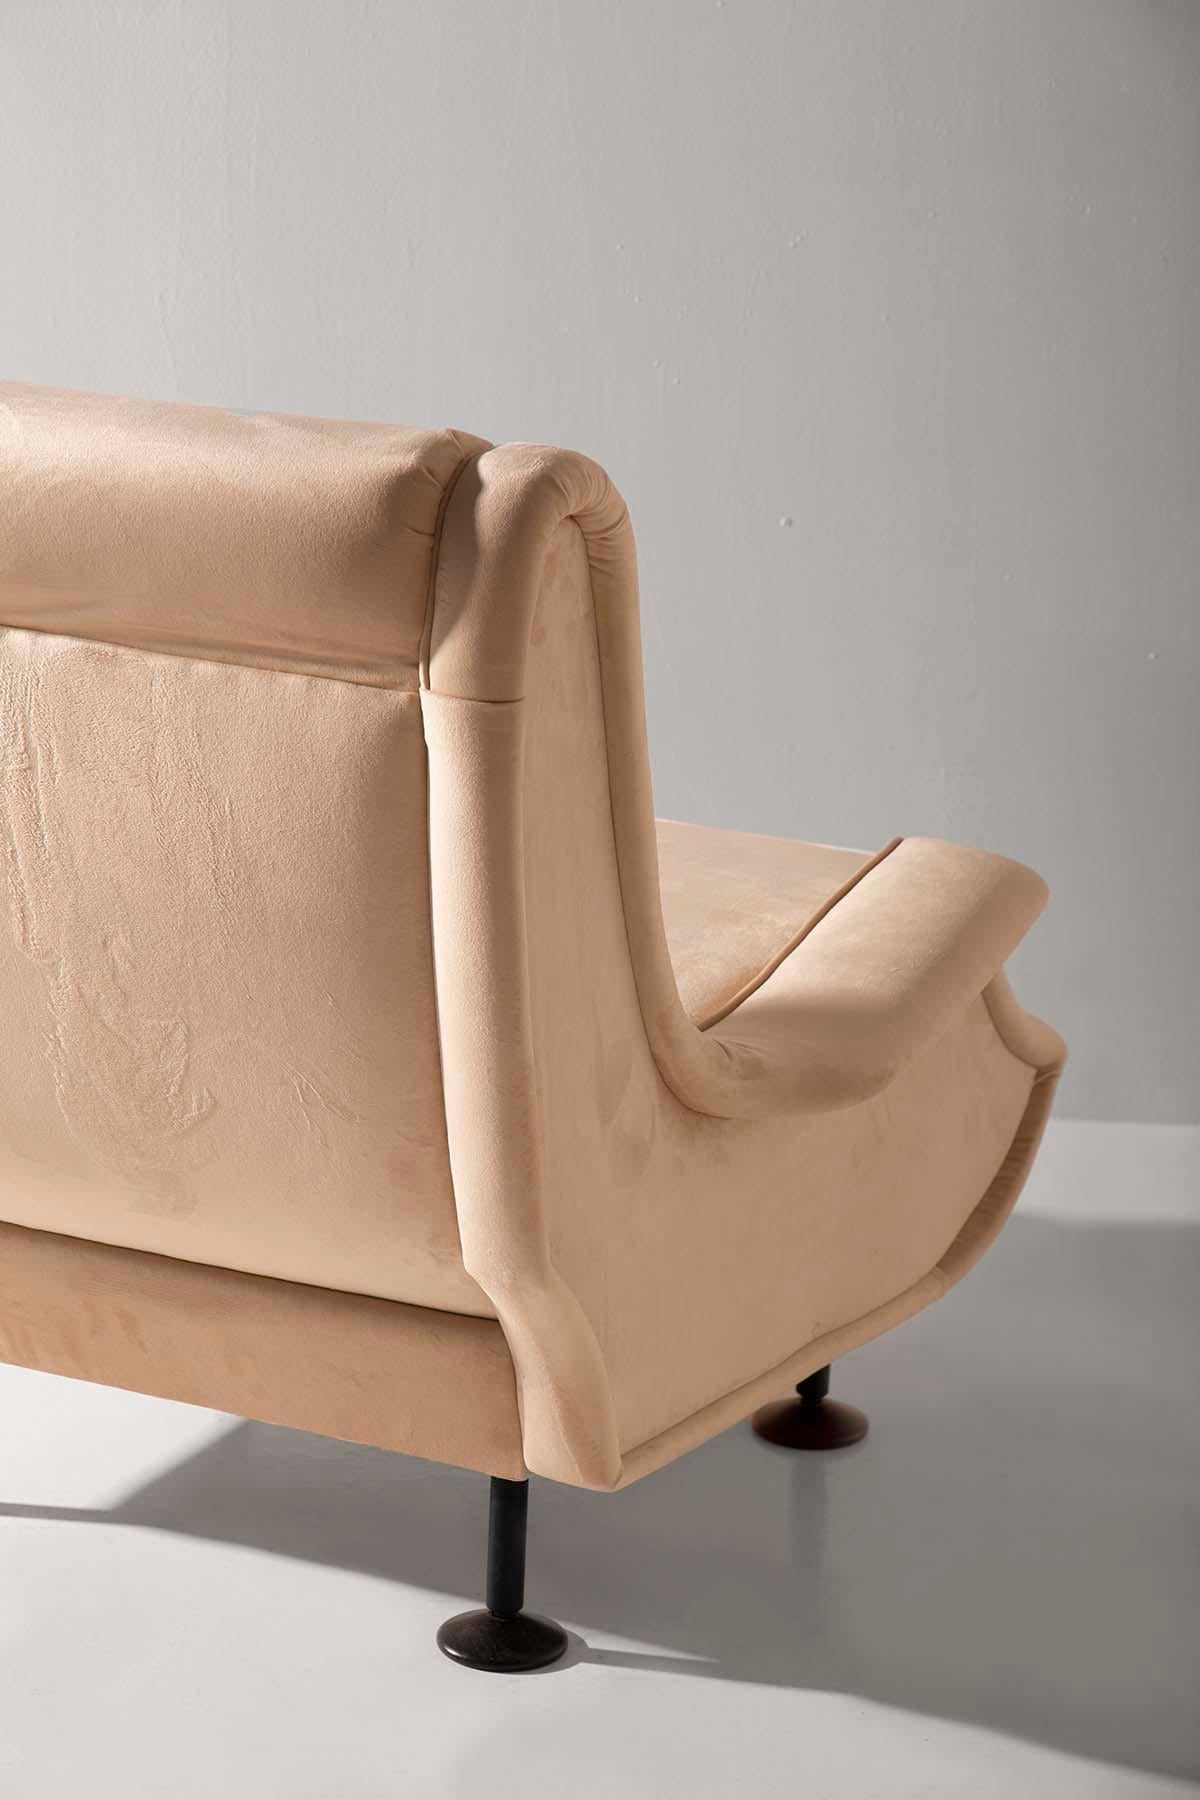 Mid-20th Century Marco Zanuso Pair of Italian Armchairs in Beige Velvet for Arflex For Sale